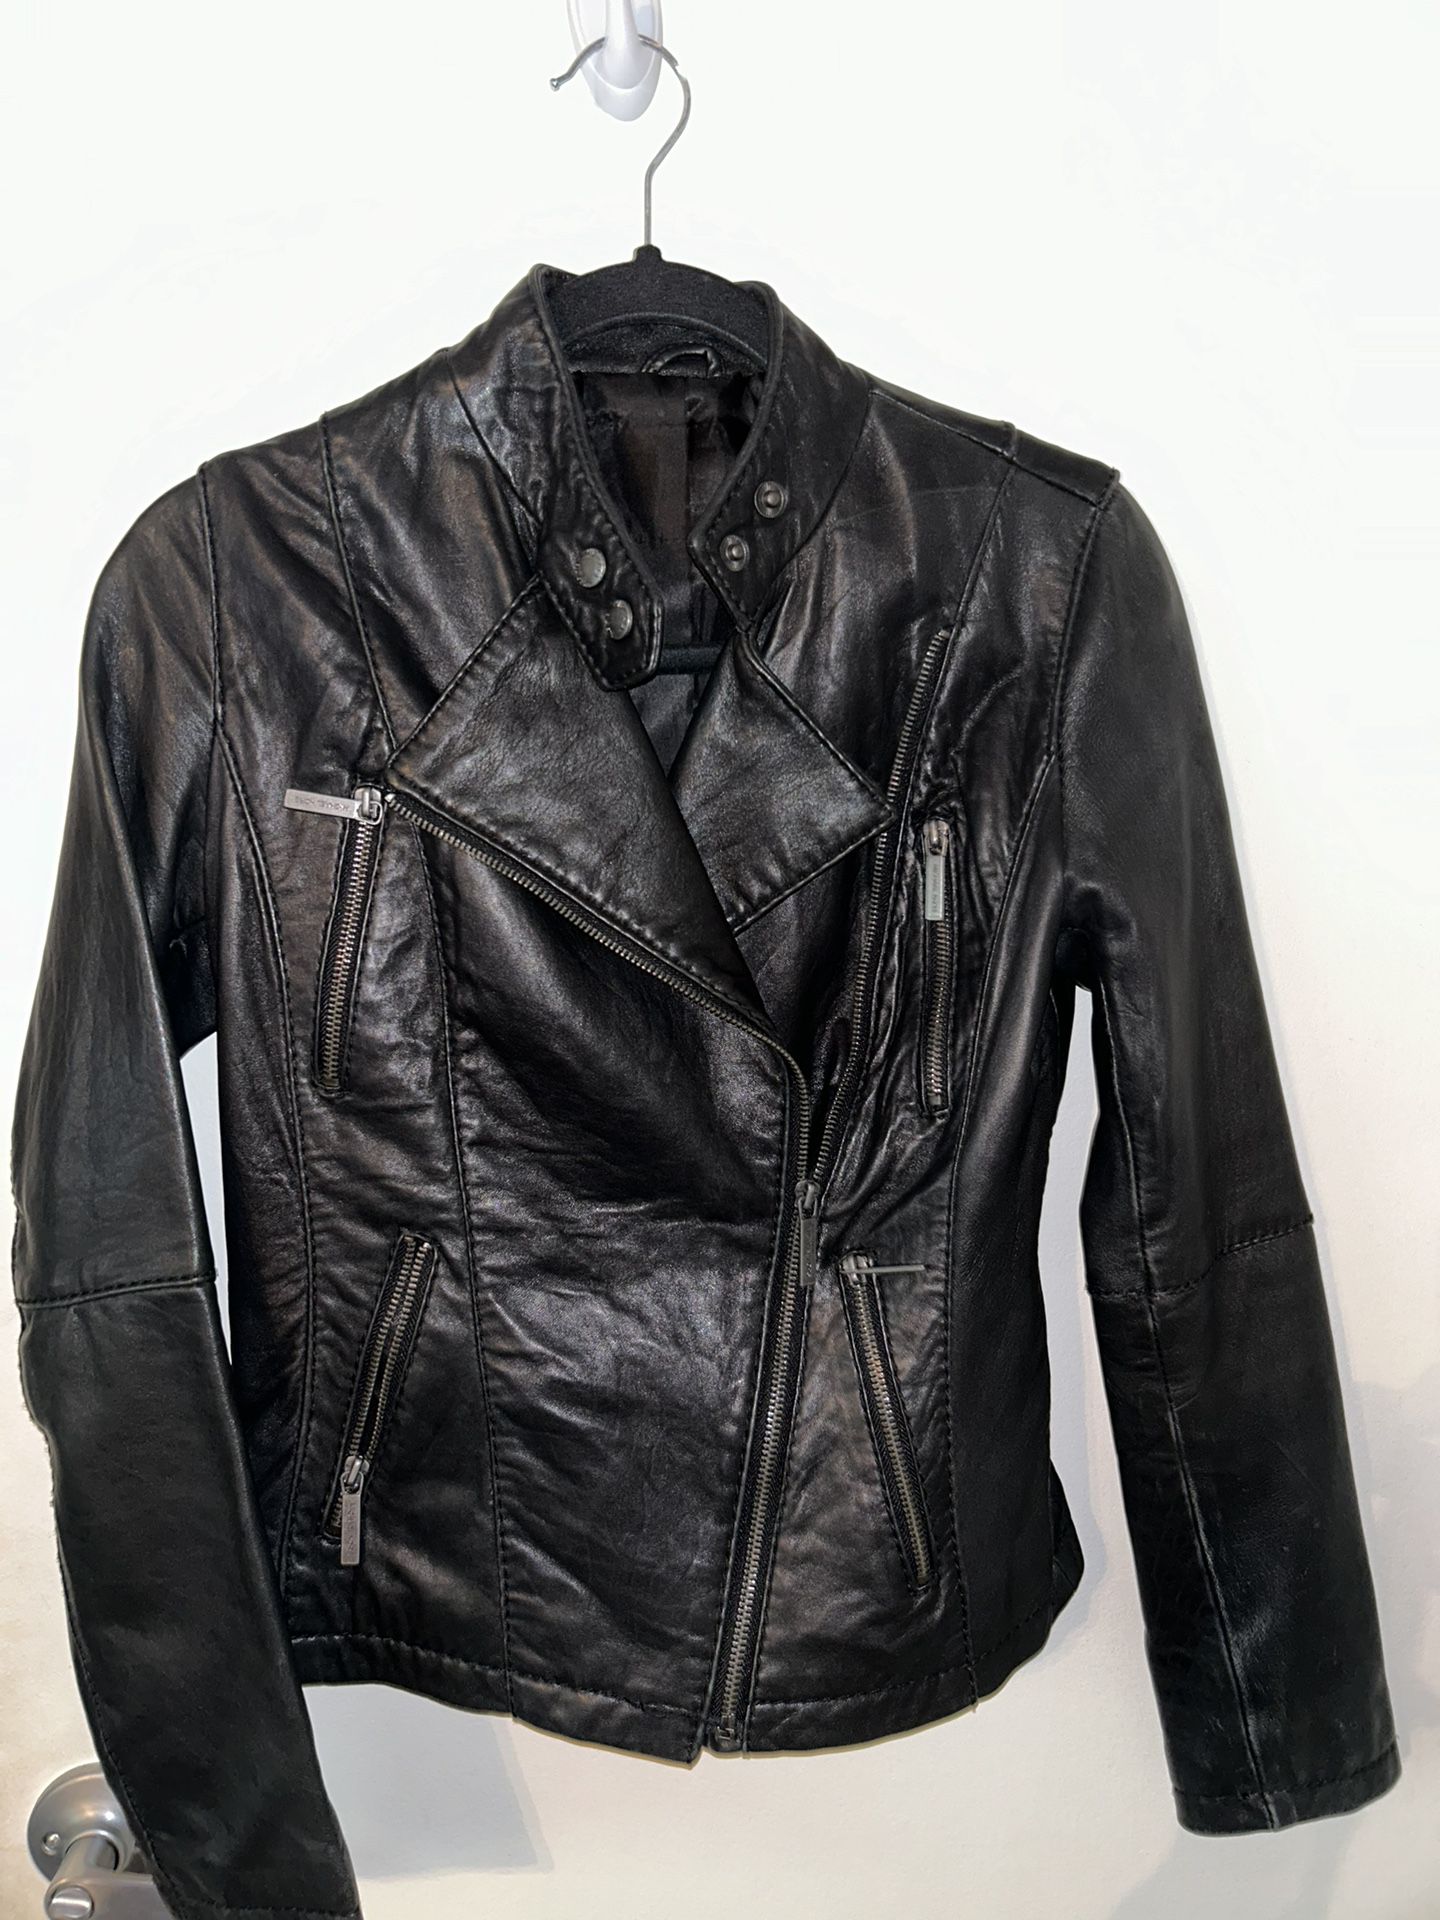 Michael Kors woman’s leather Jacket